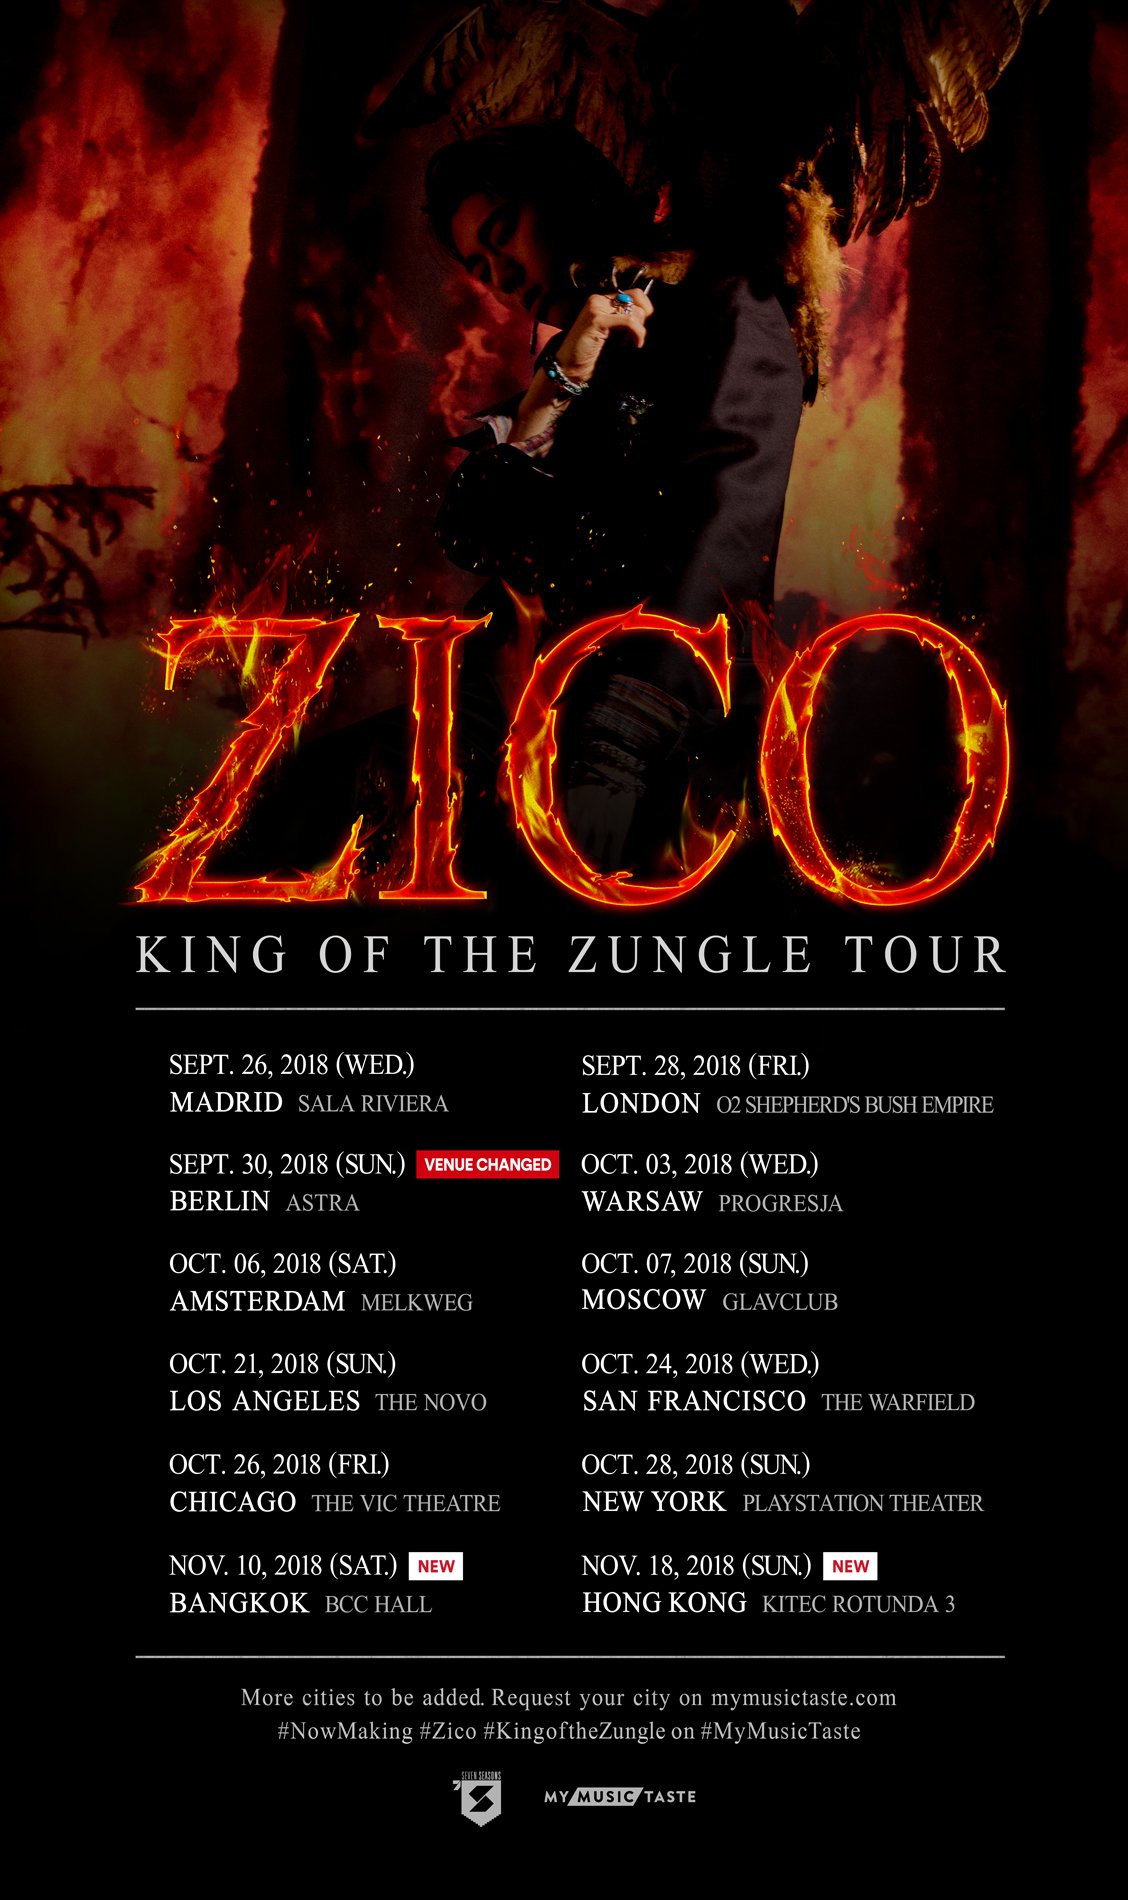 Zico King of the Zungle Tour